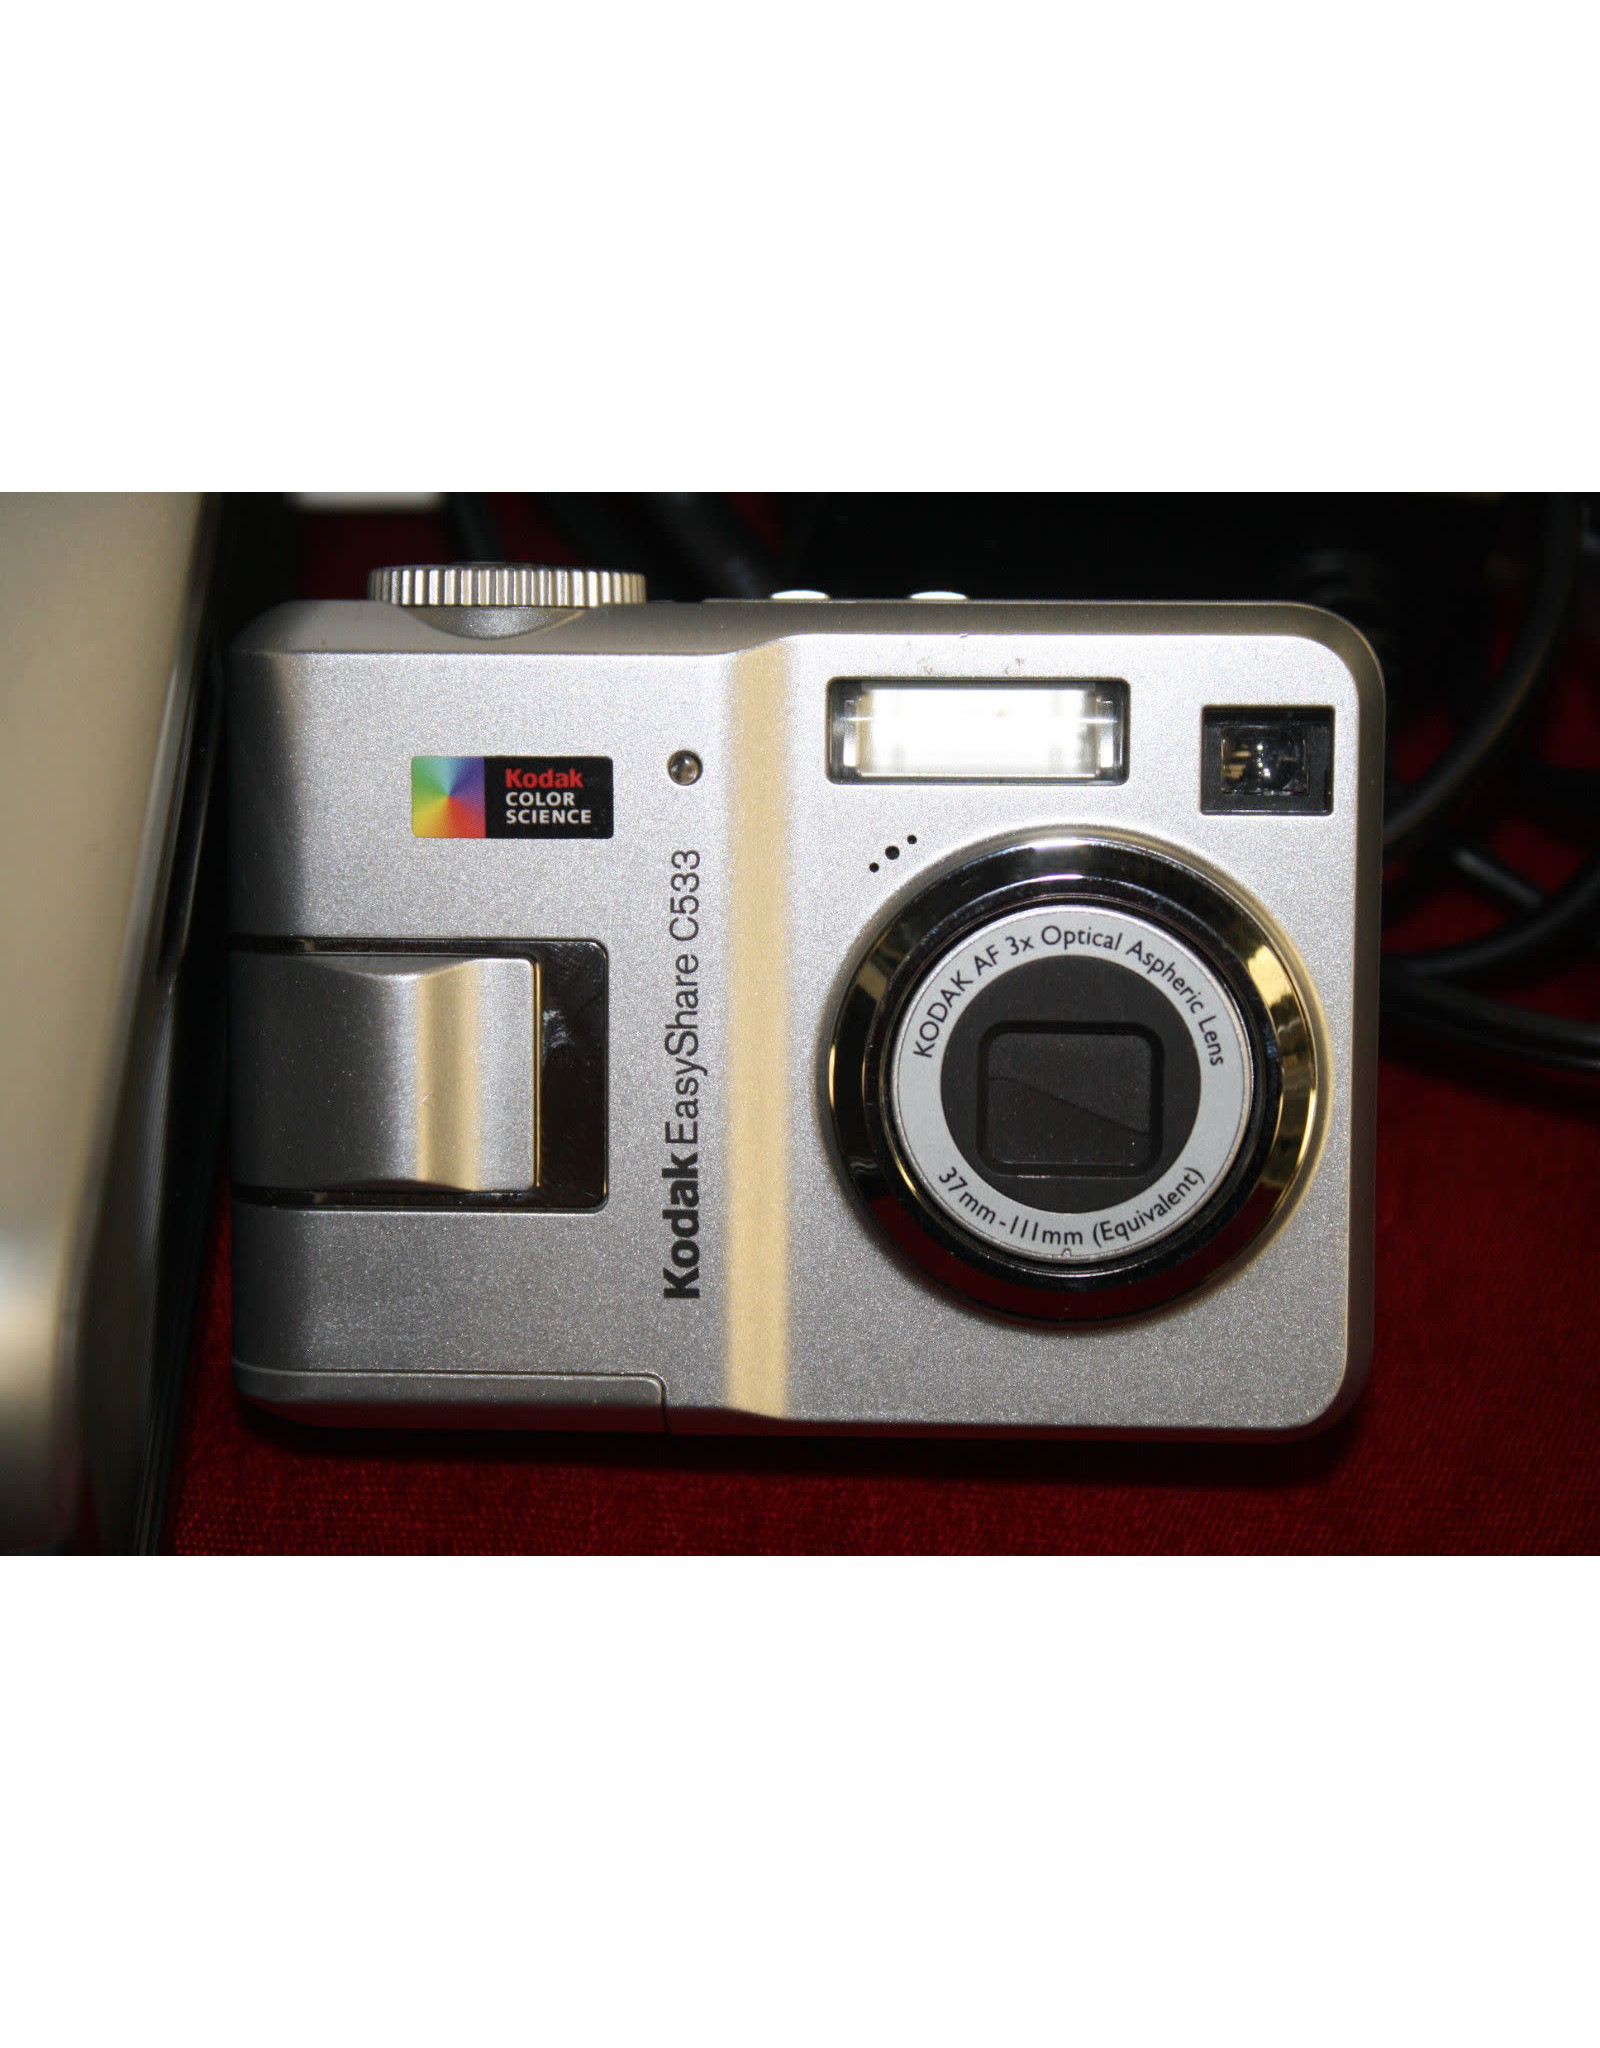 Kodak Easyshare Series 3 Printer Dock Driver For Mac